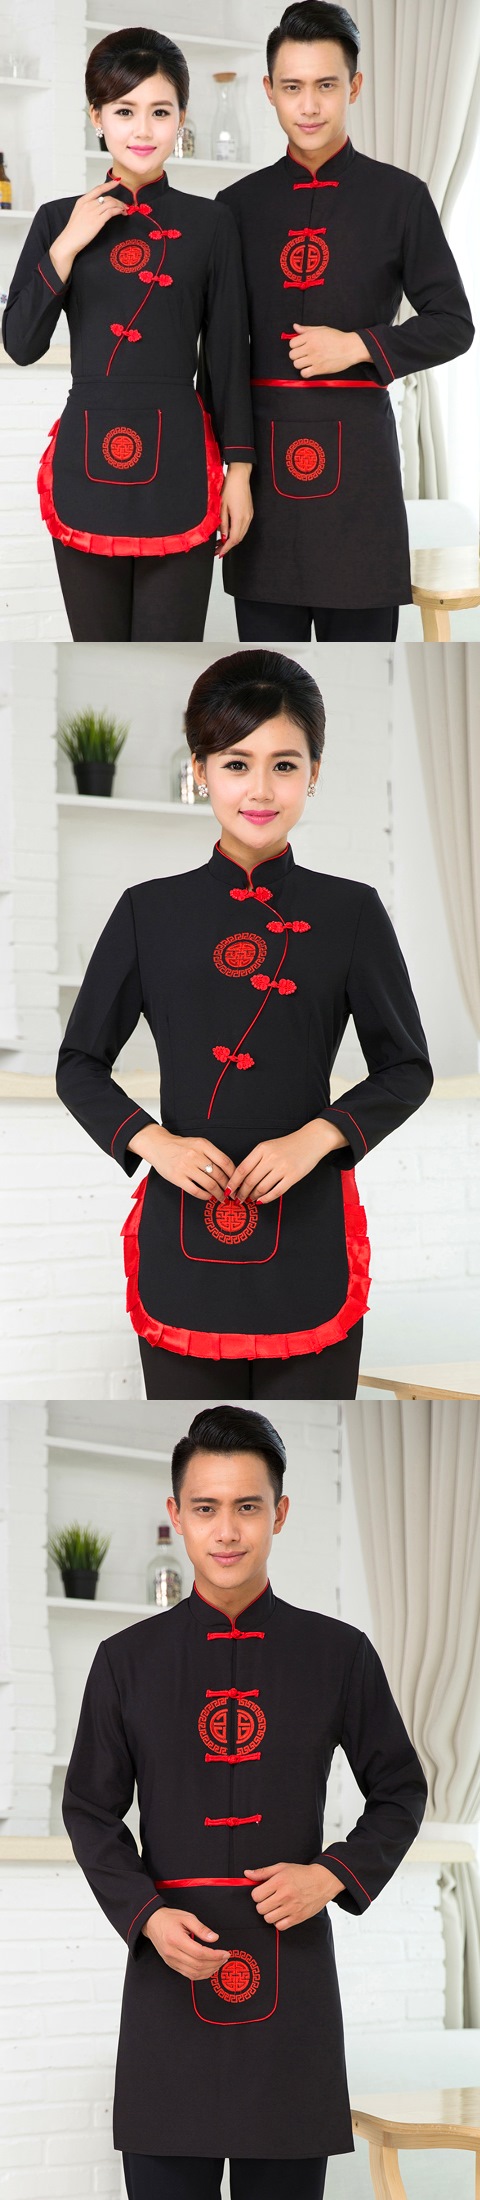 Mandarin Style Restaurant Uniform-Top (Black)